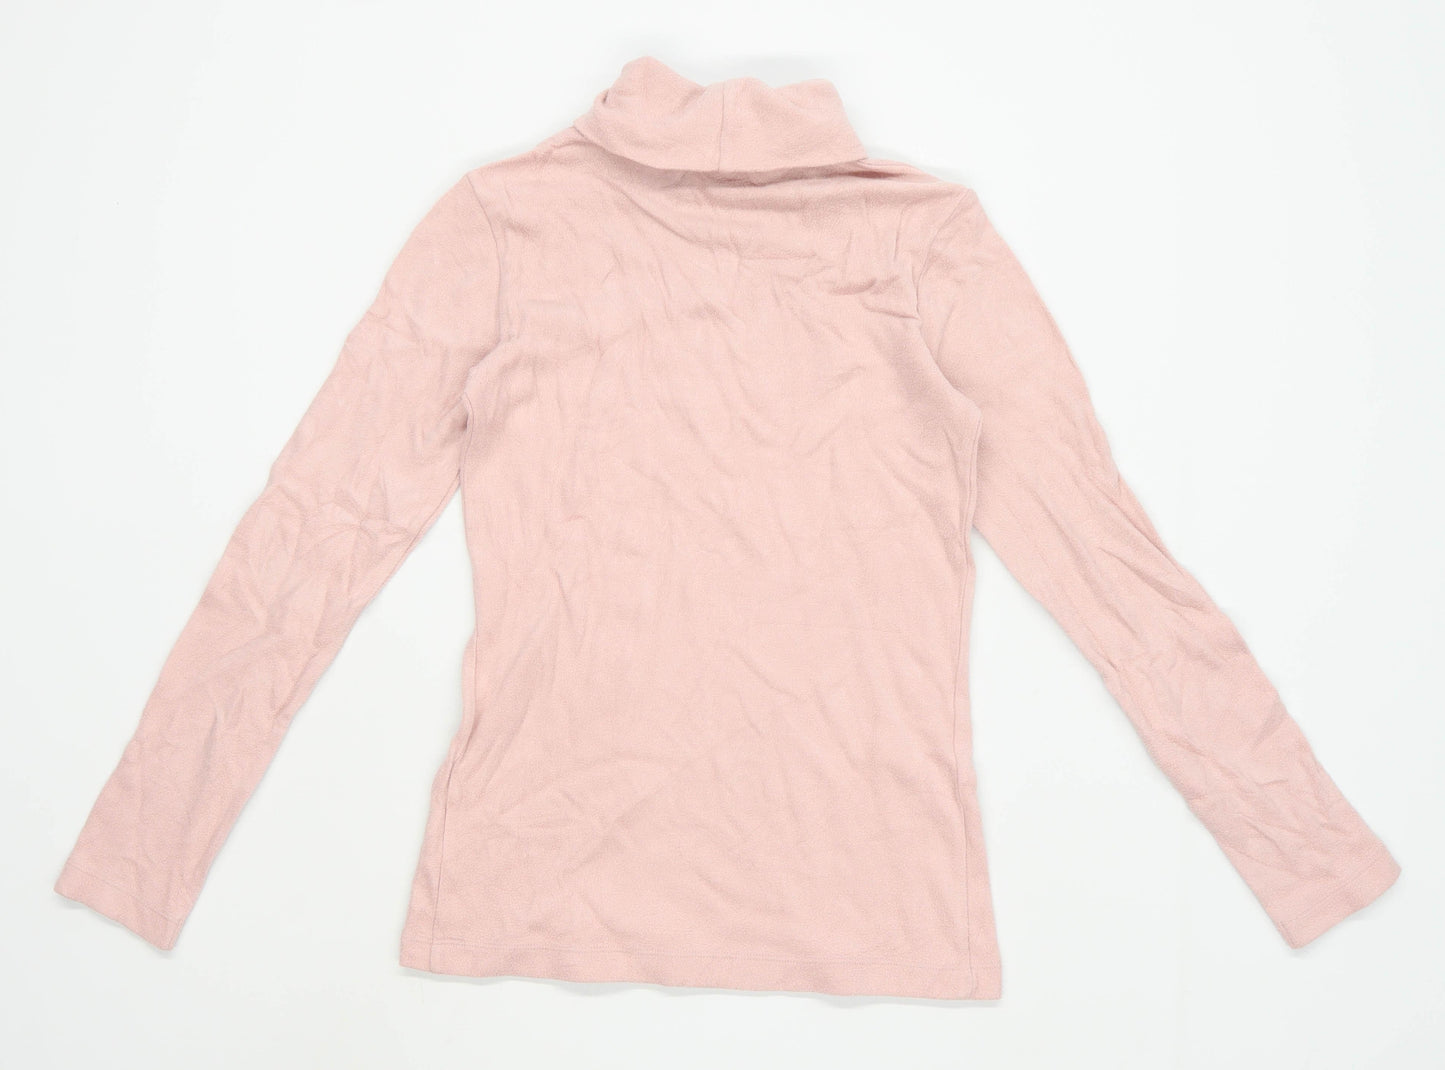 Uniqlo Womens Size S Pink Fleece (Regular)